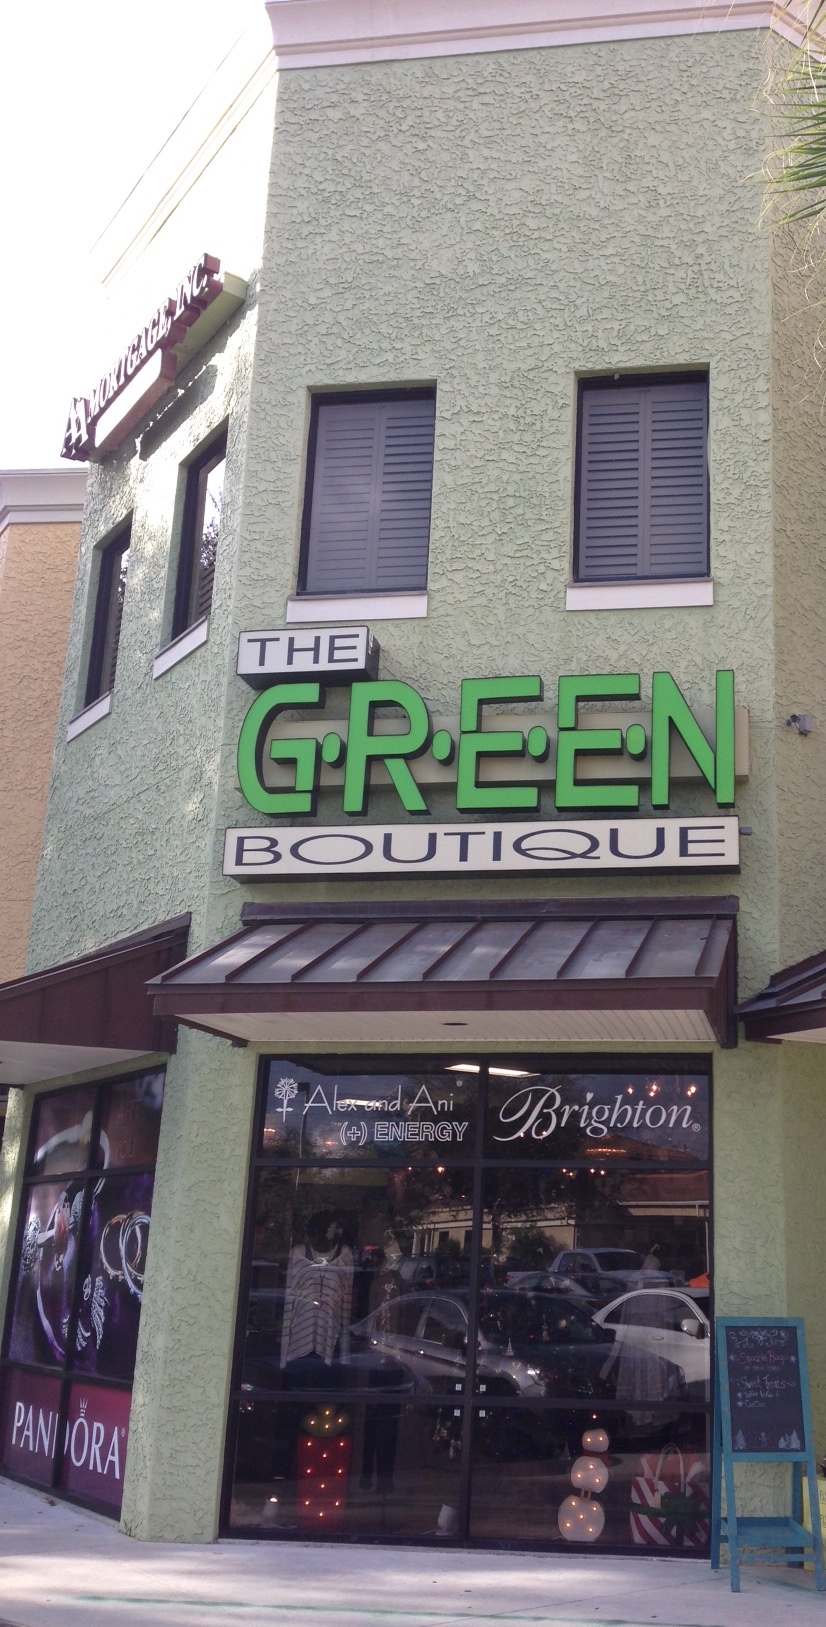 Green Boutique